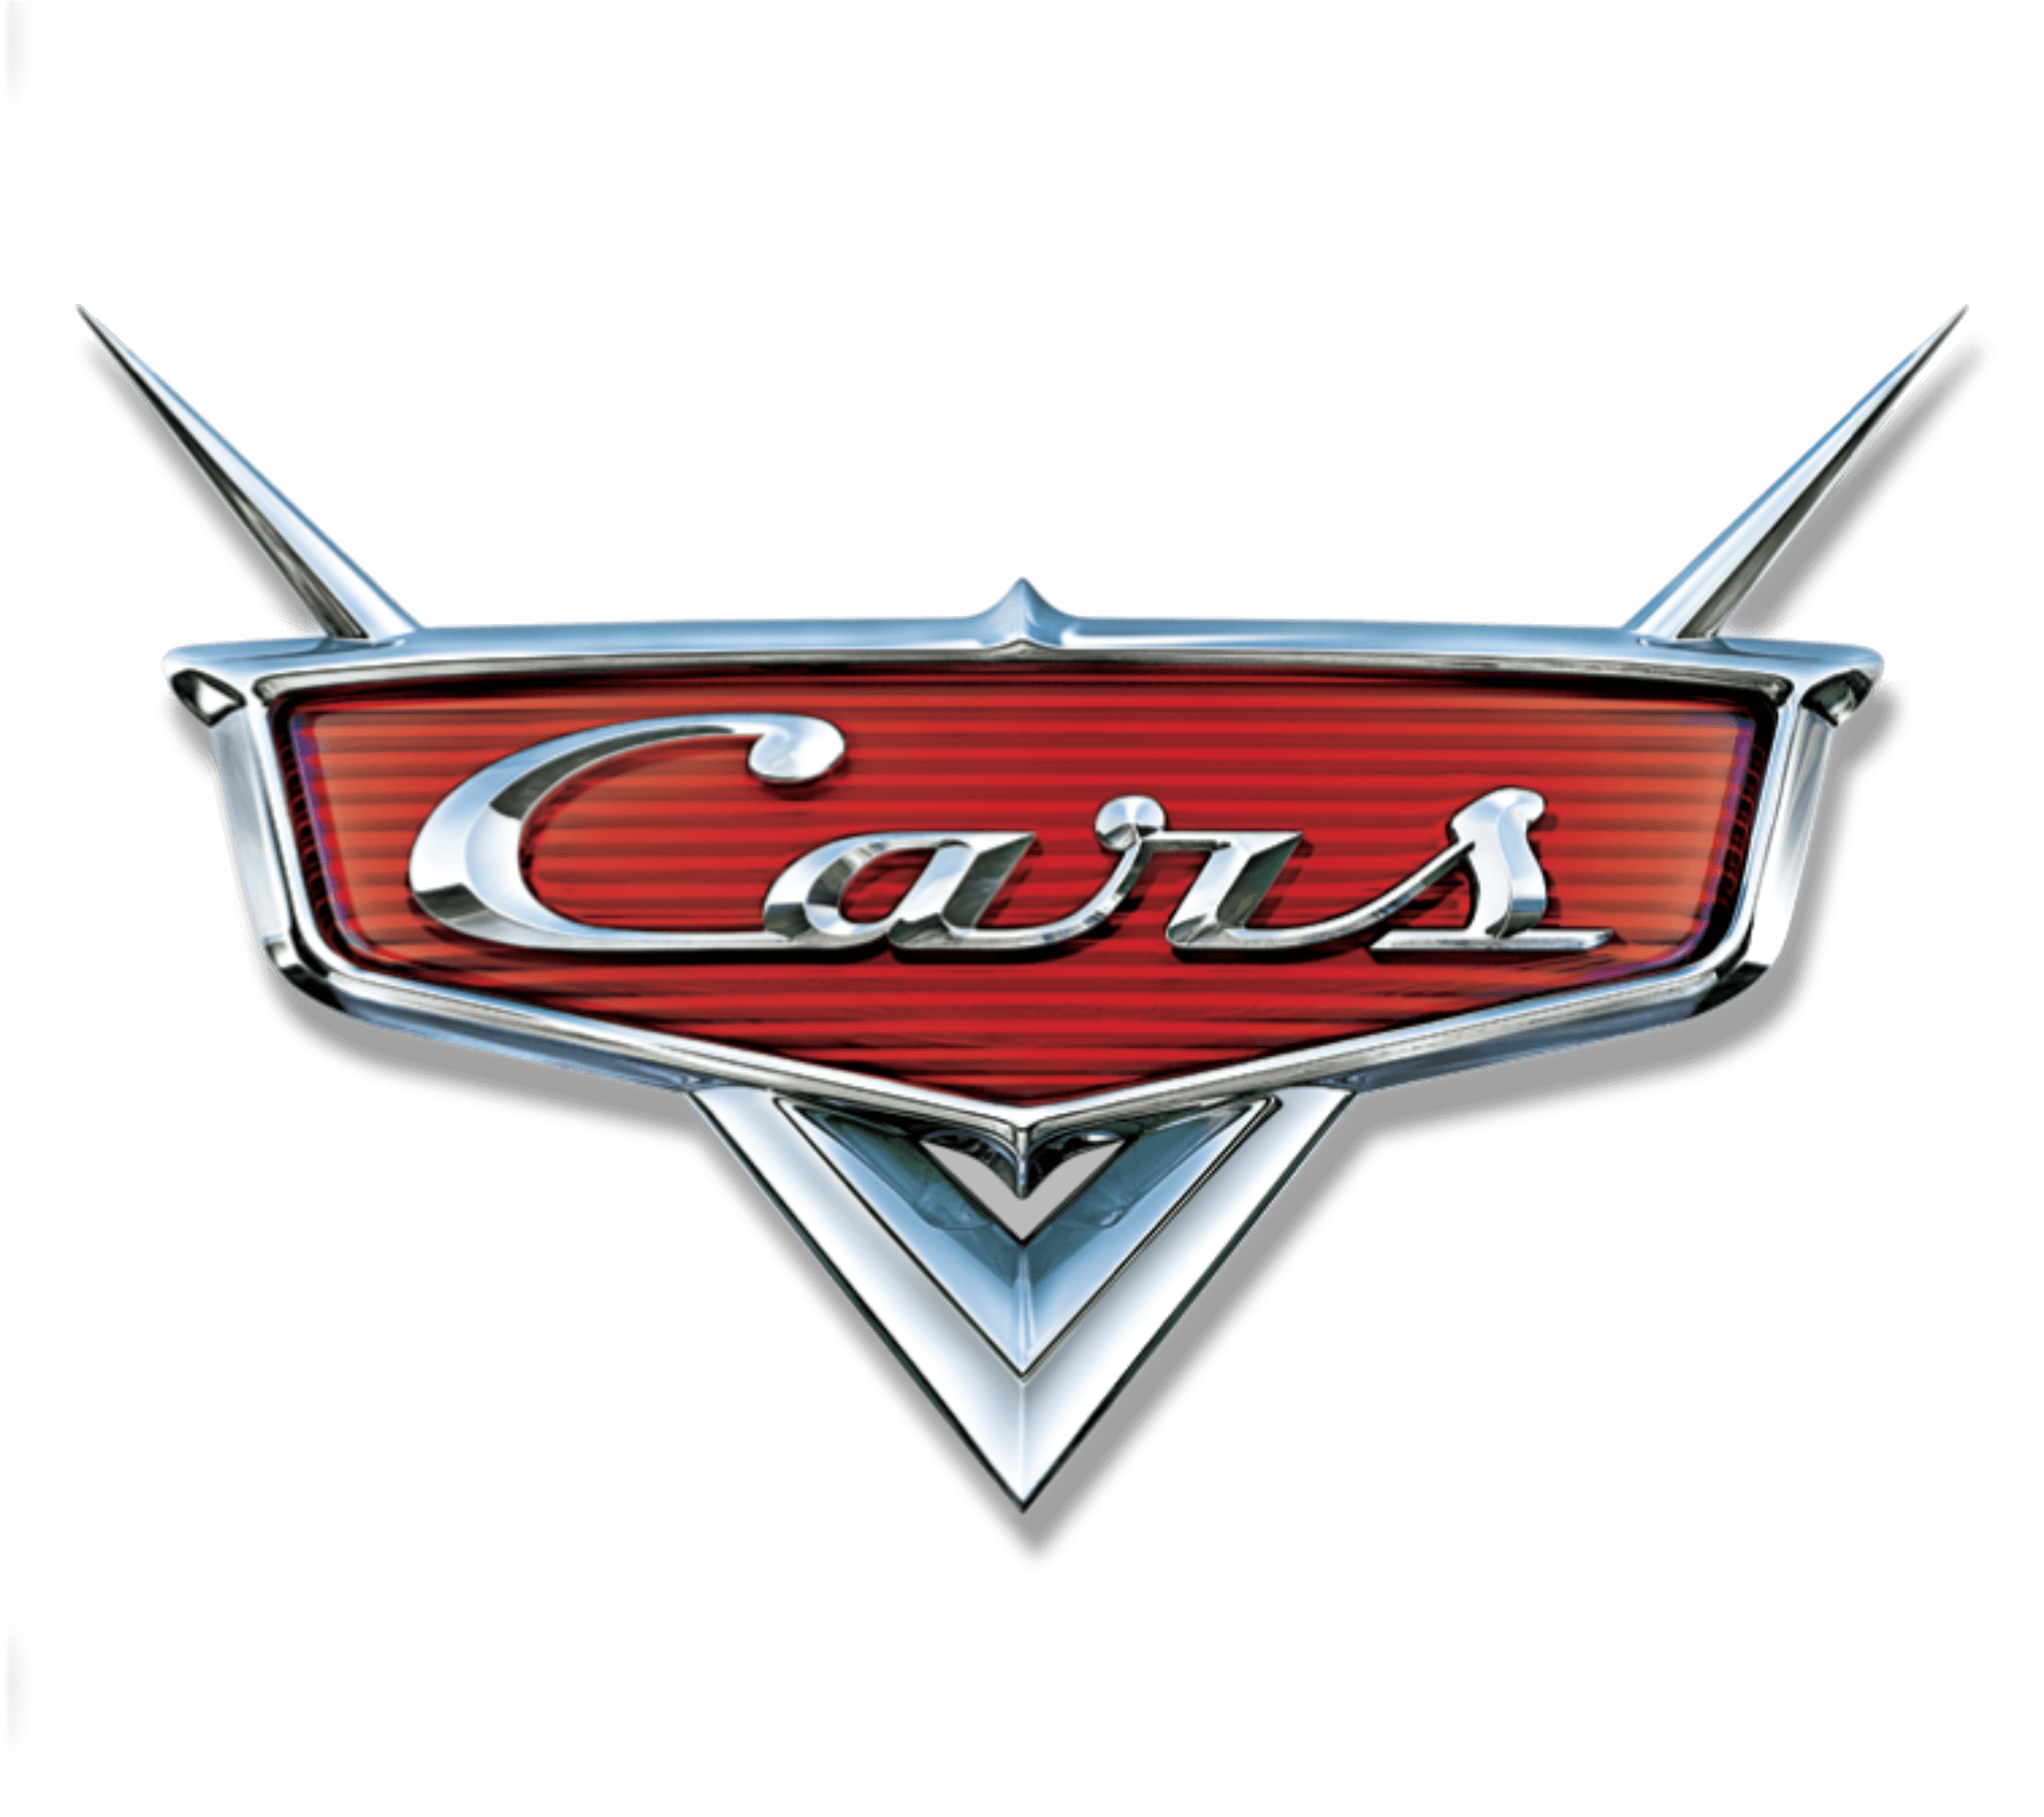 Disney Pixar Cars 1 Logo - Disney and Pixar Cars Logo PNG Transparent & SVG Vector - Freebie Supply